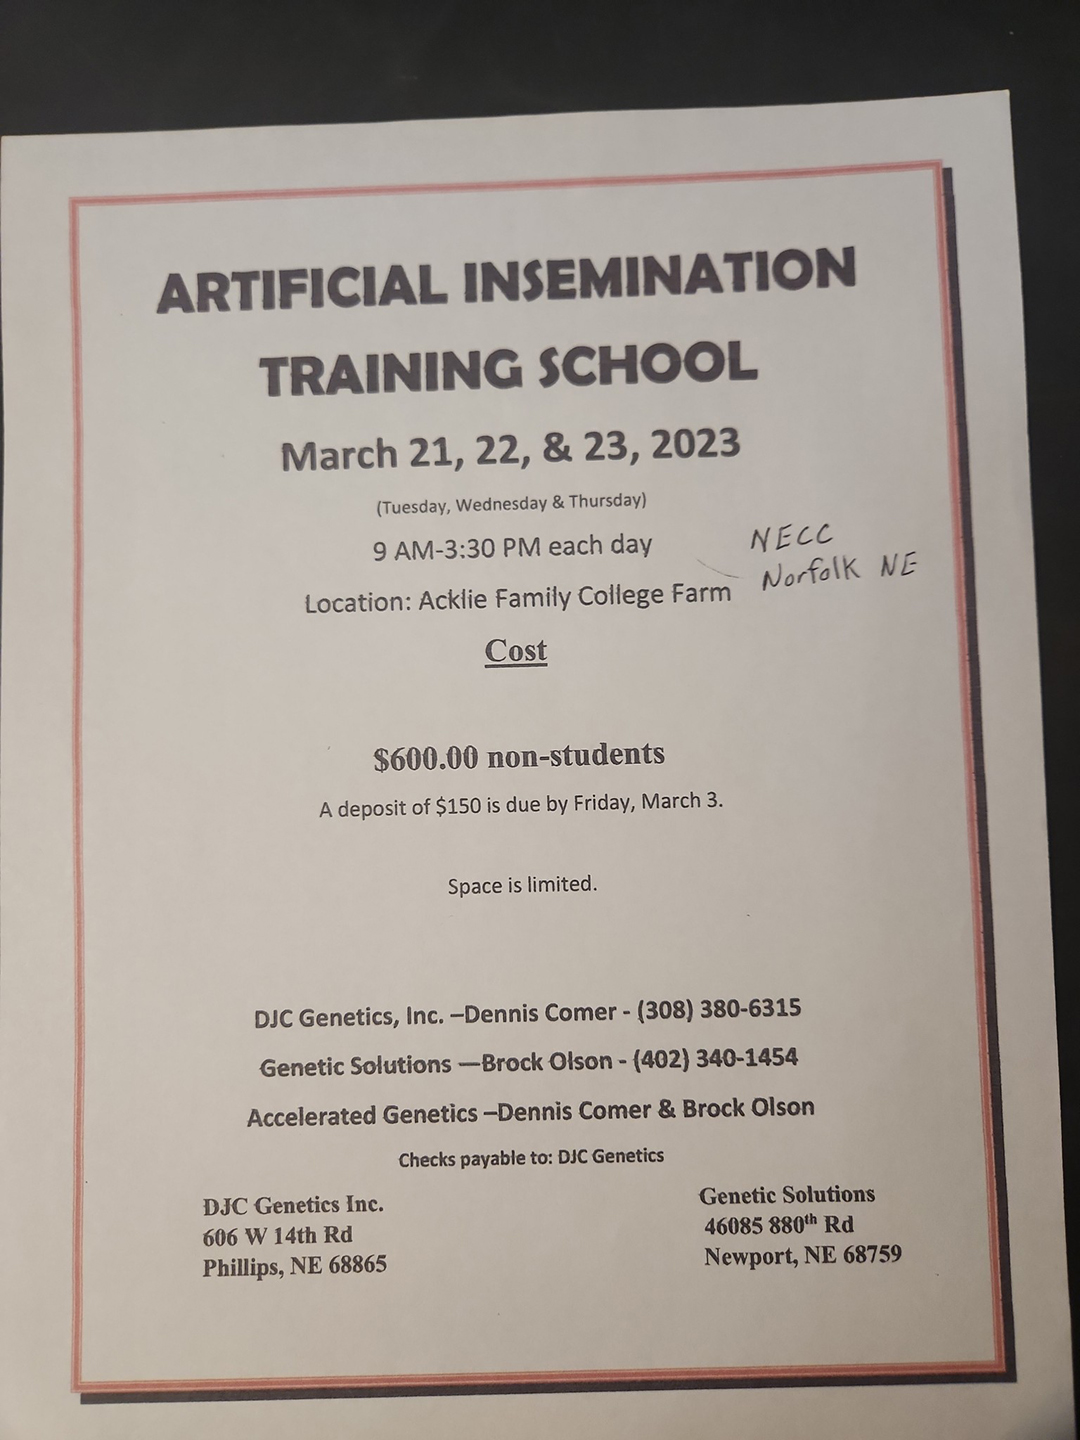 Registration to Artificial Insemination School